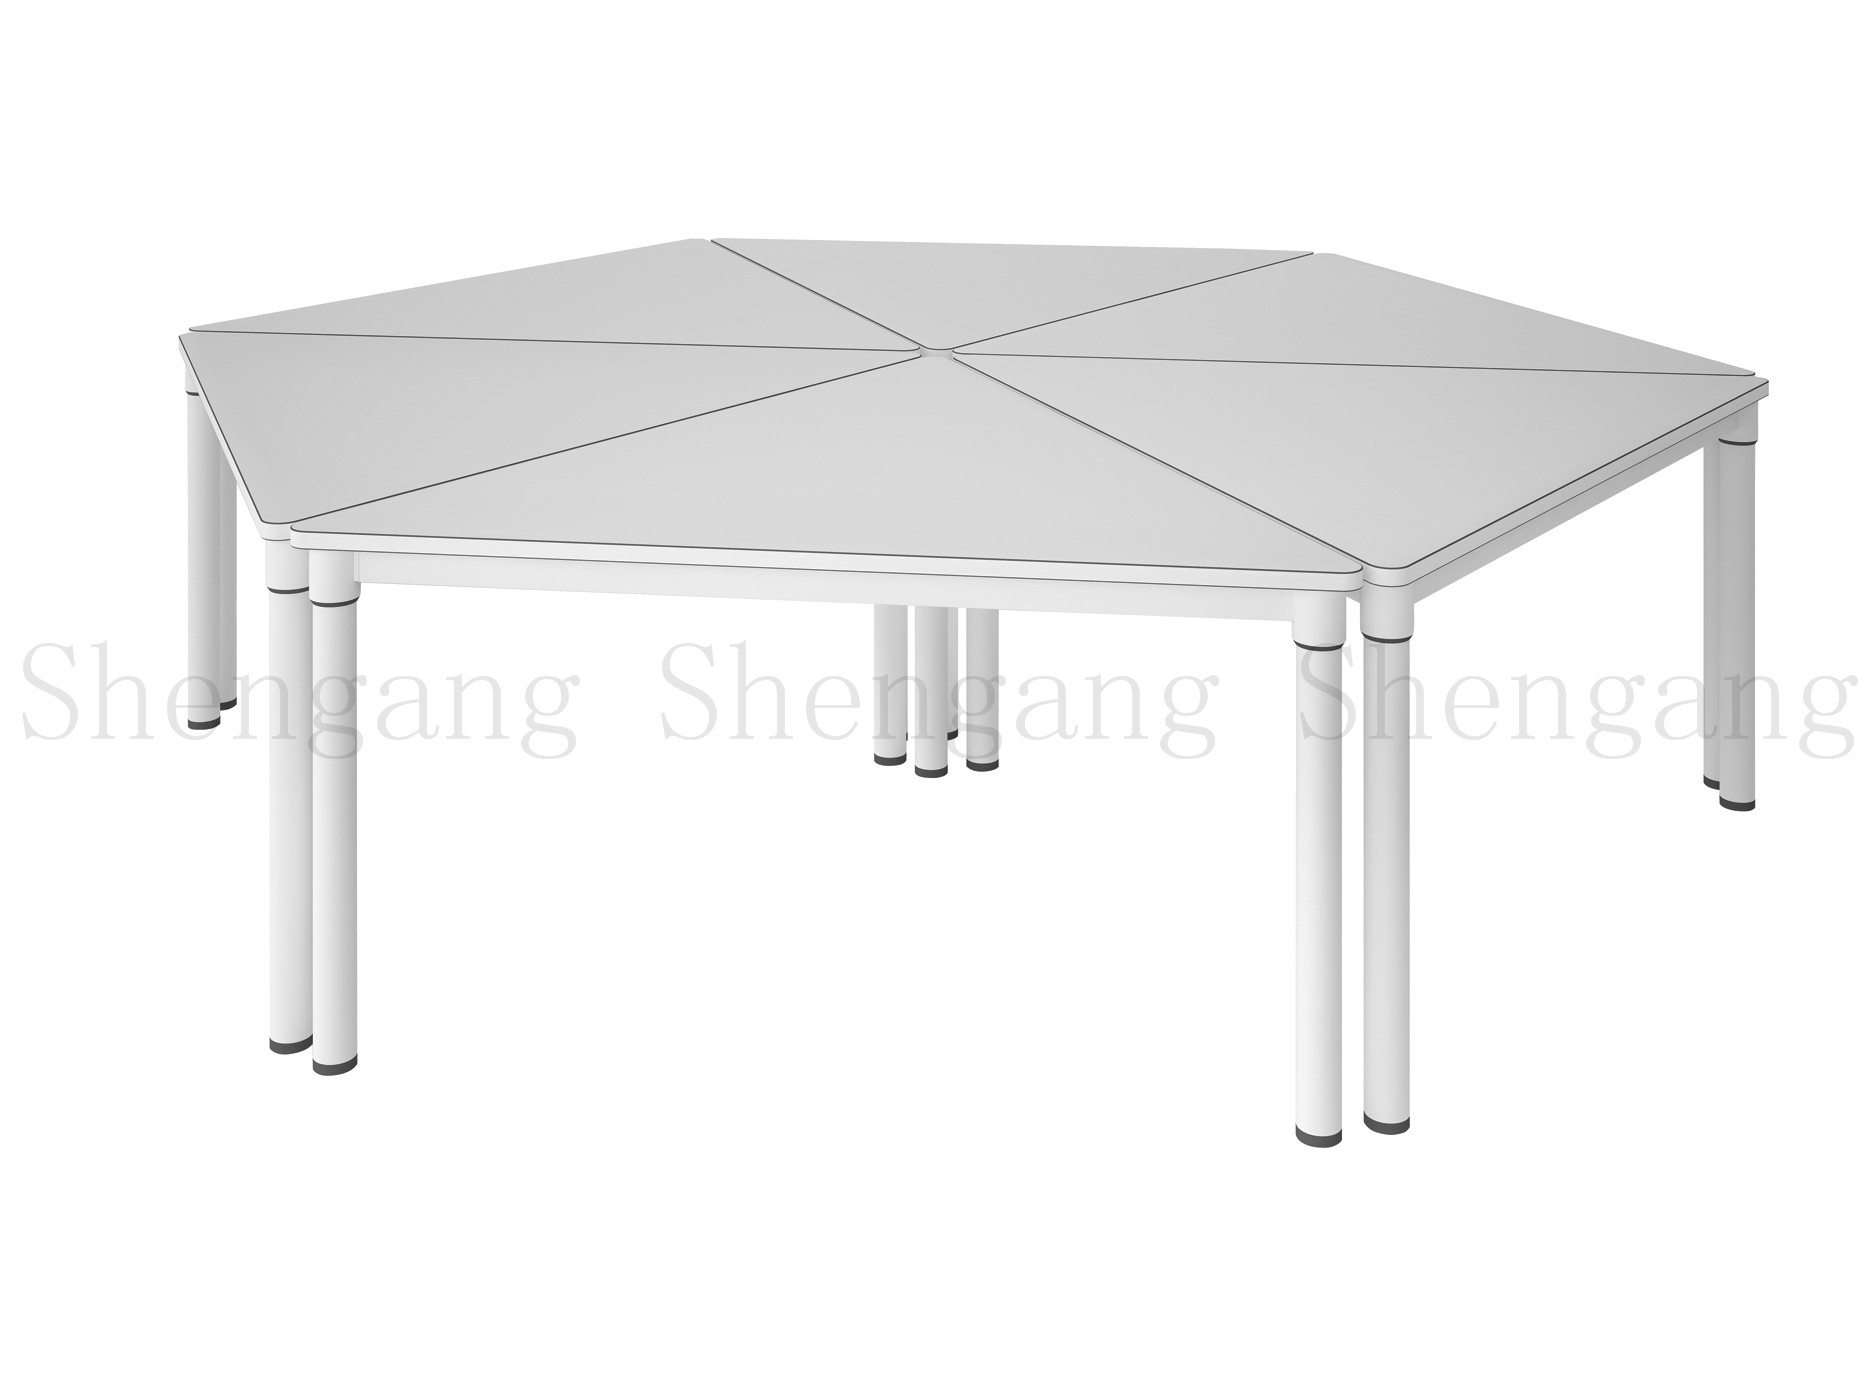 Hexagonal tables